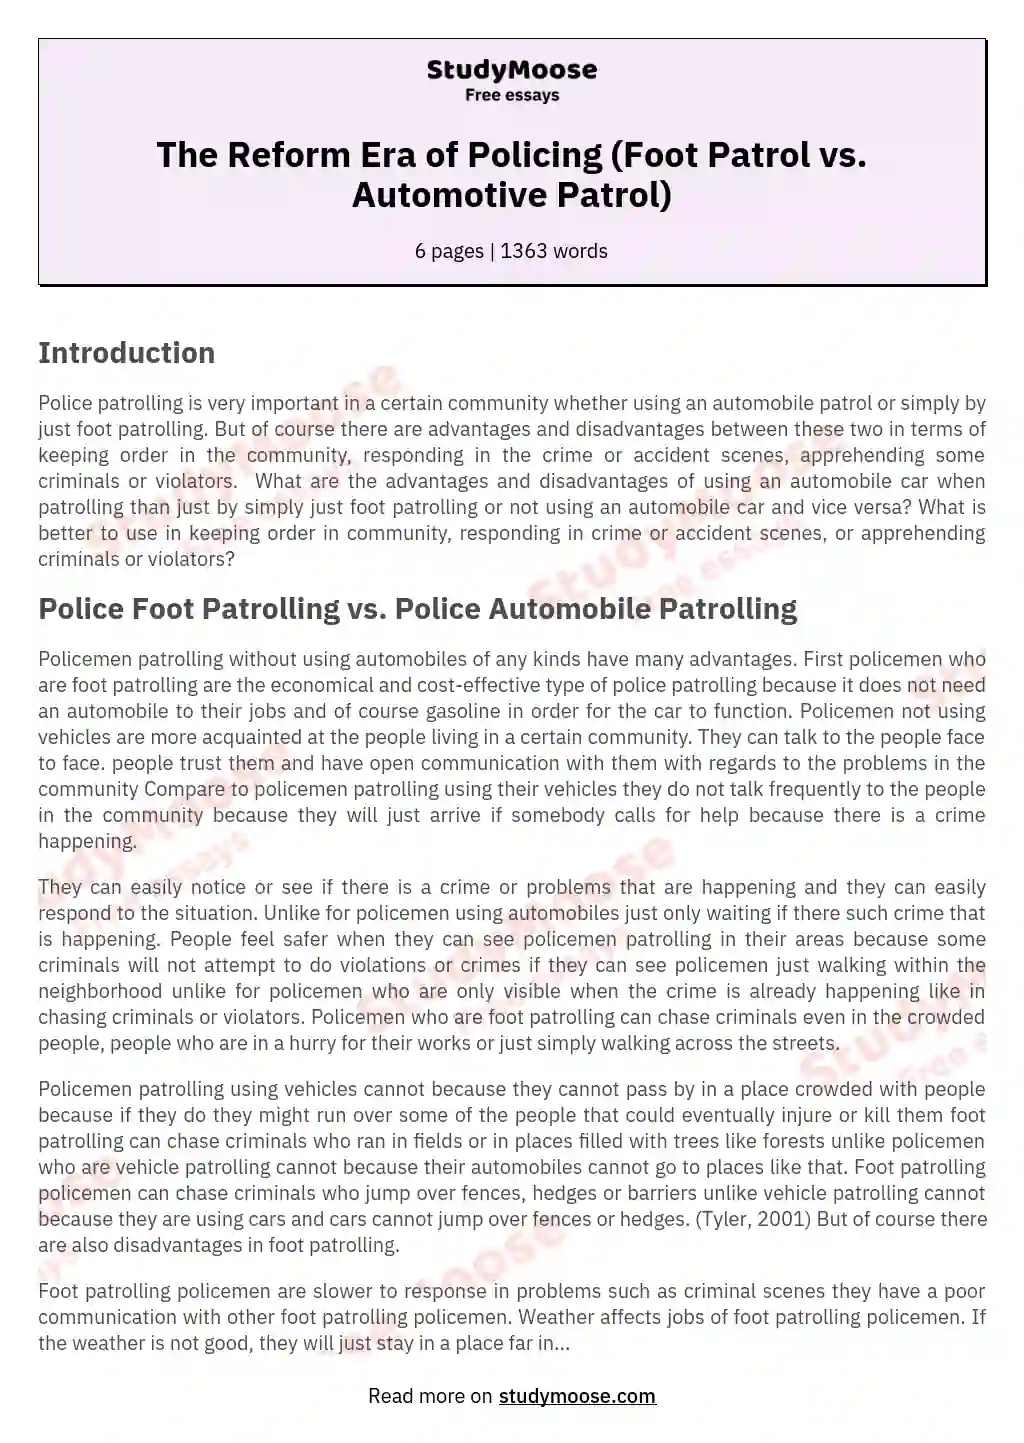 The Reform Era of Policing (Foot Patrol vs. Automotive Patrol)